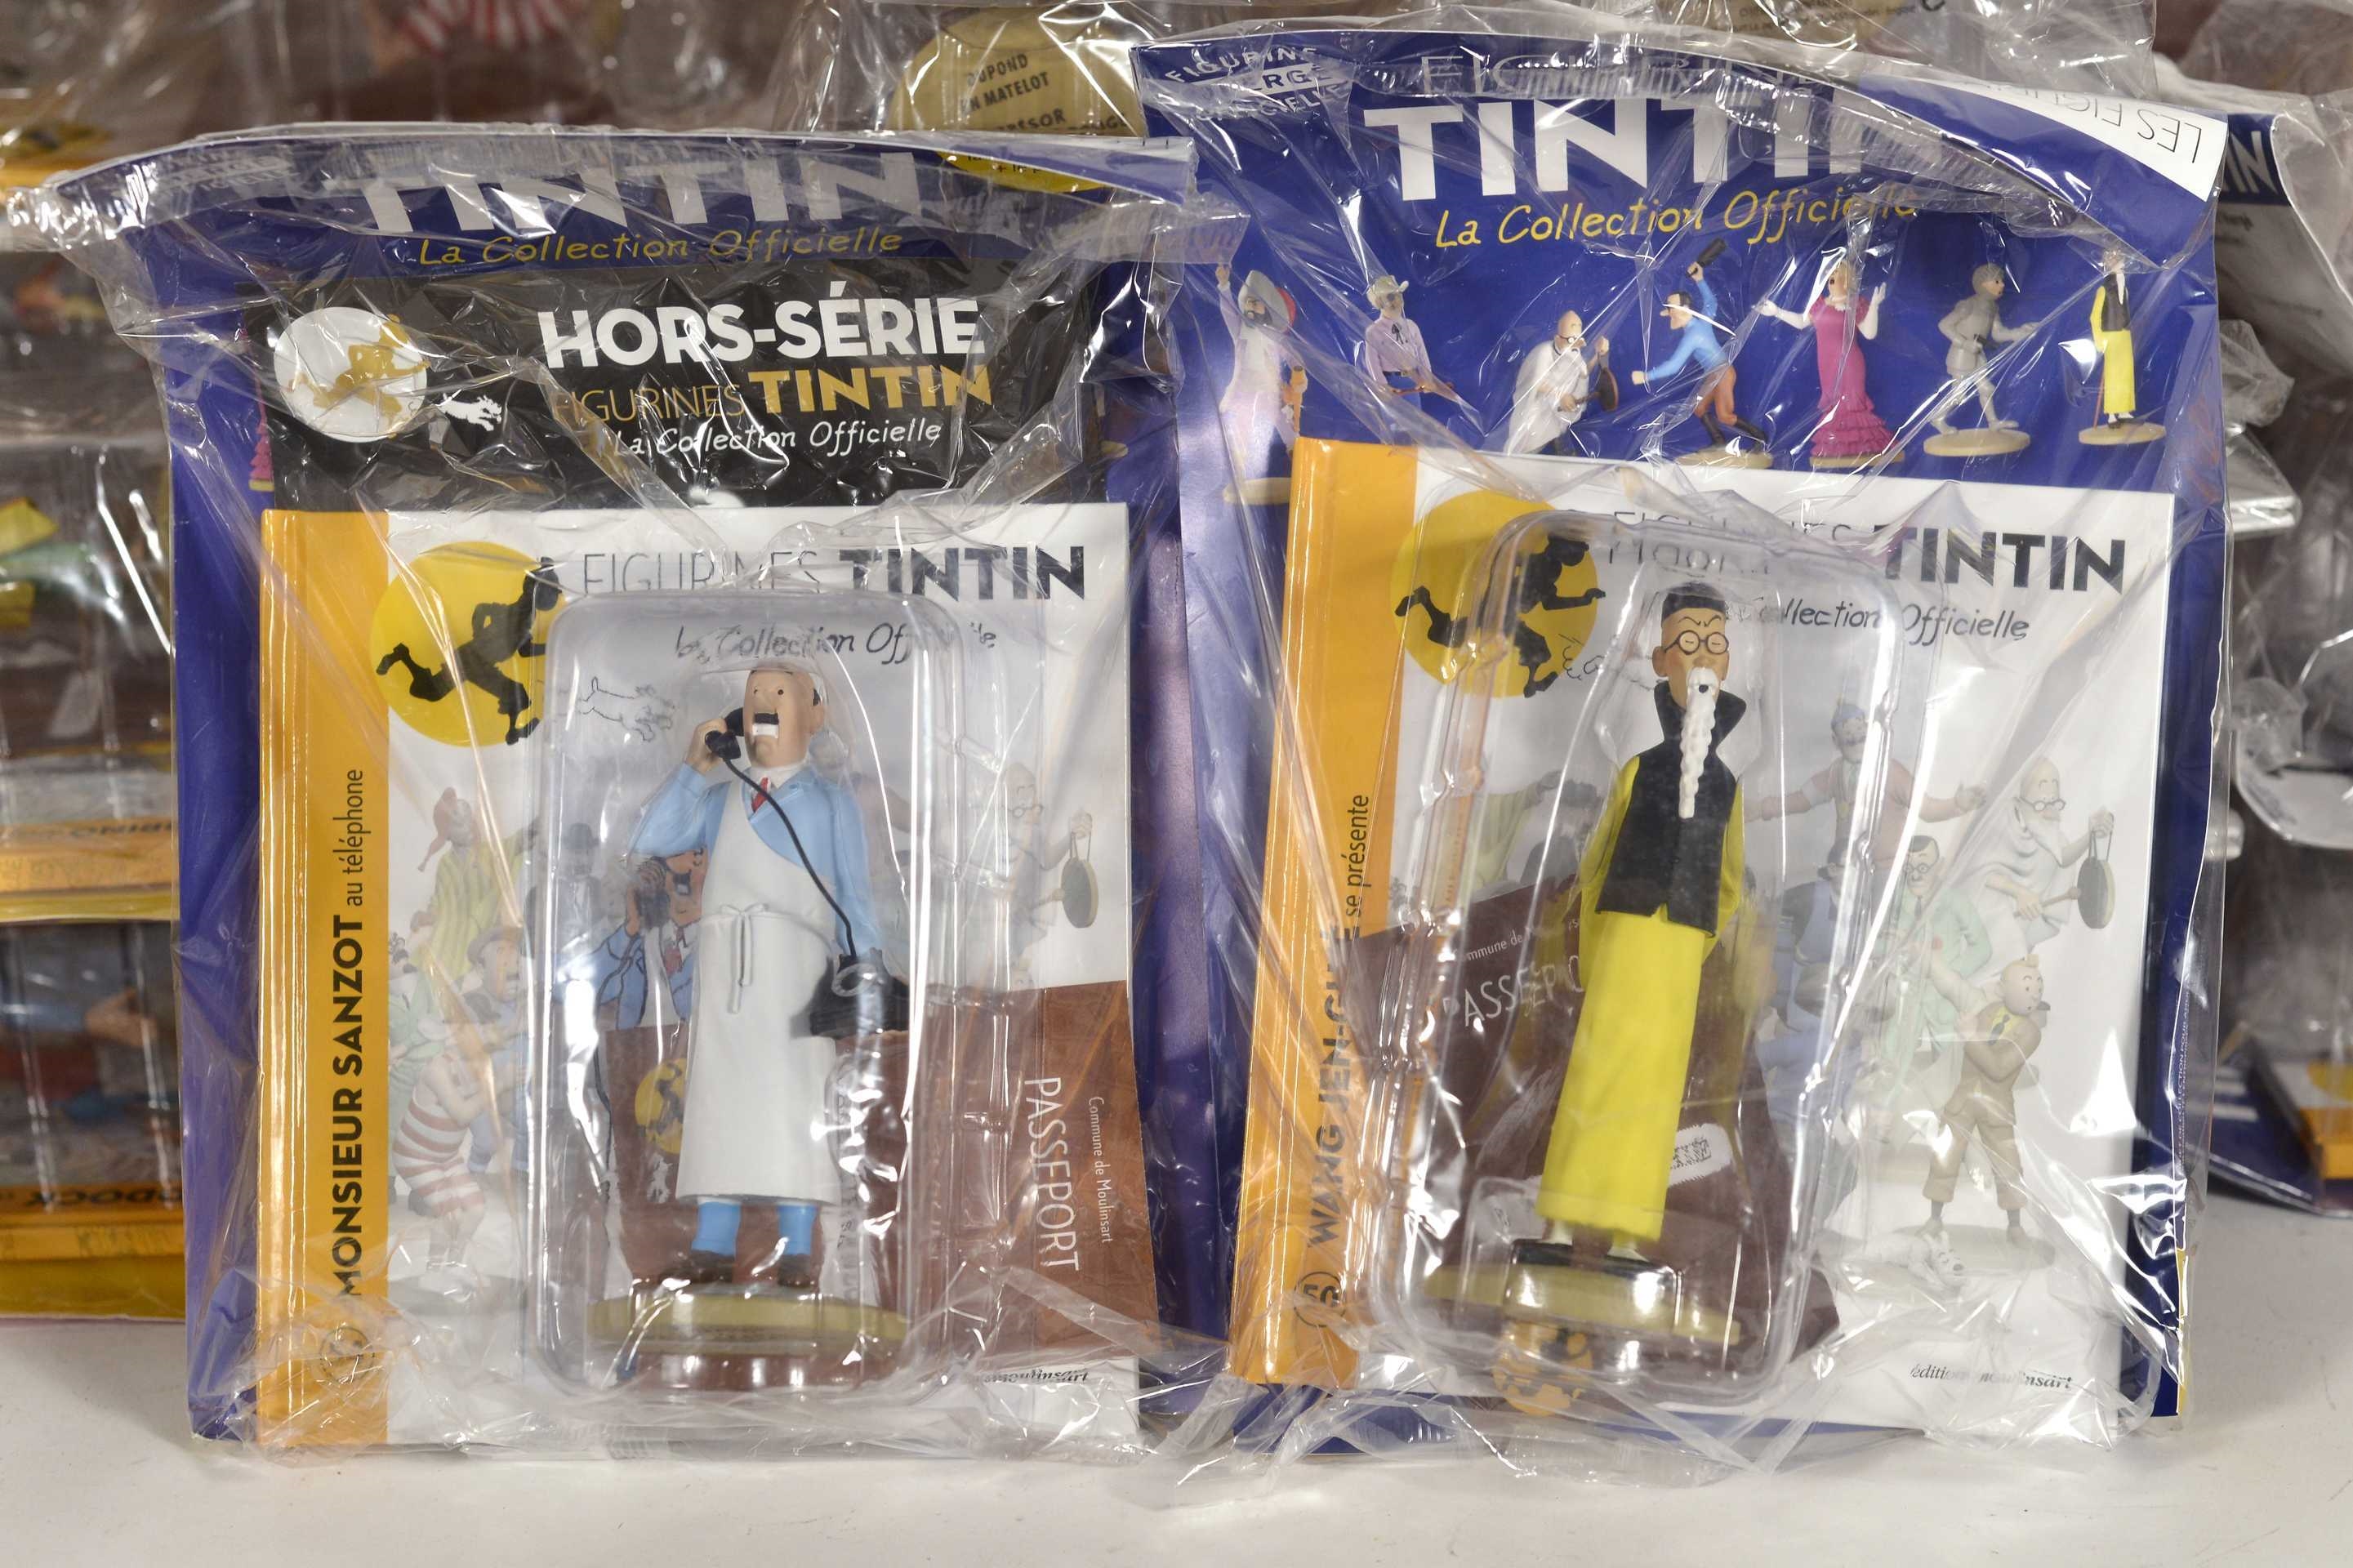 Le Mans : une importante collection de figurines Tintin sera